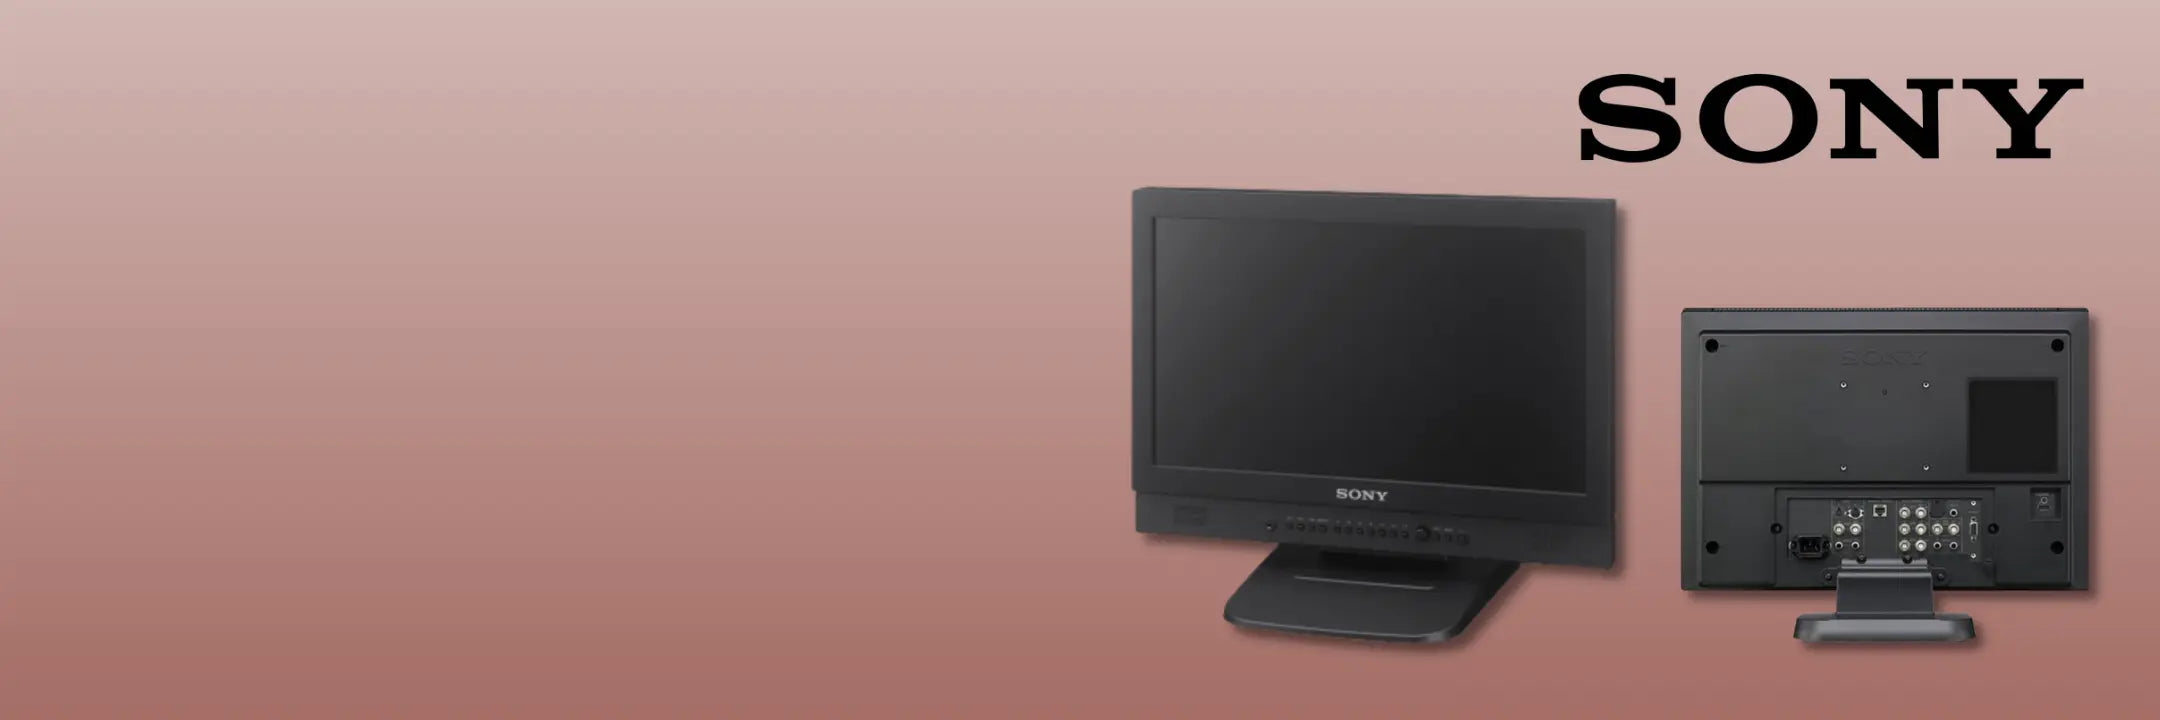 Sony monitors desktop banner